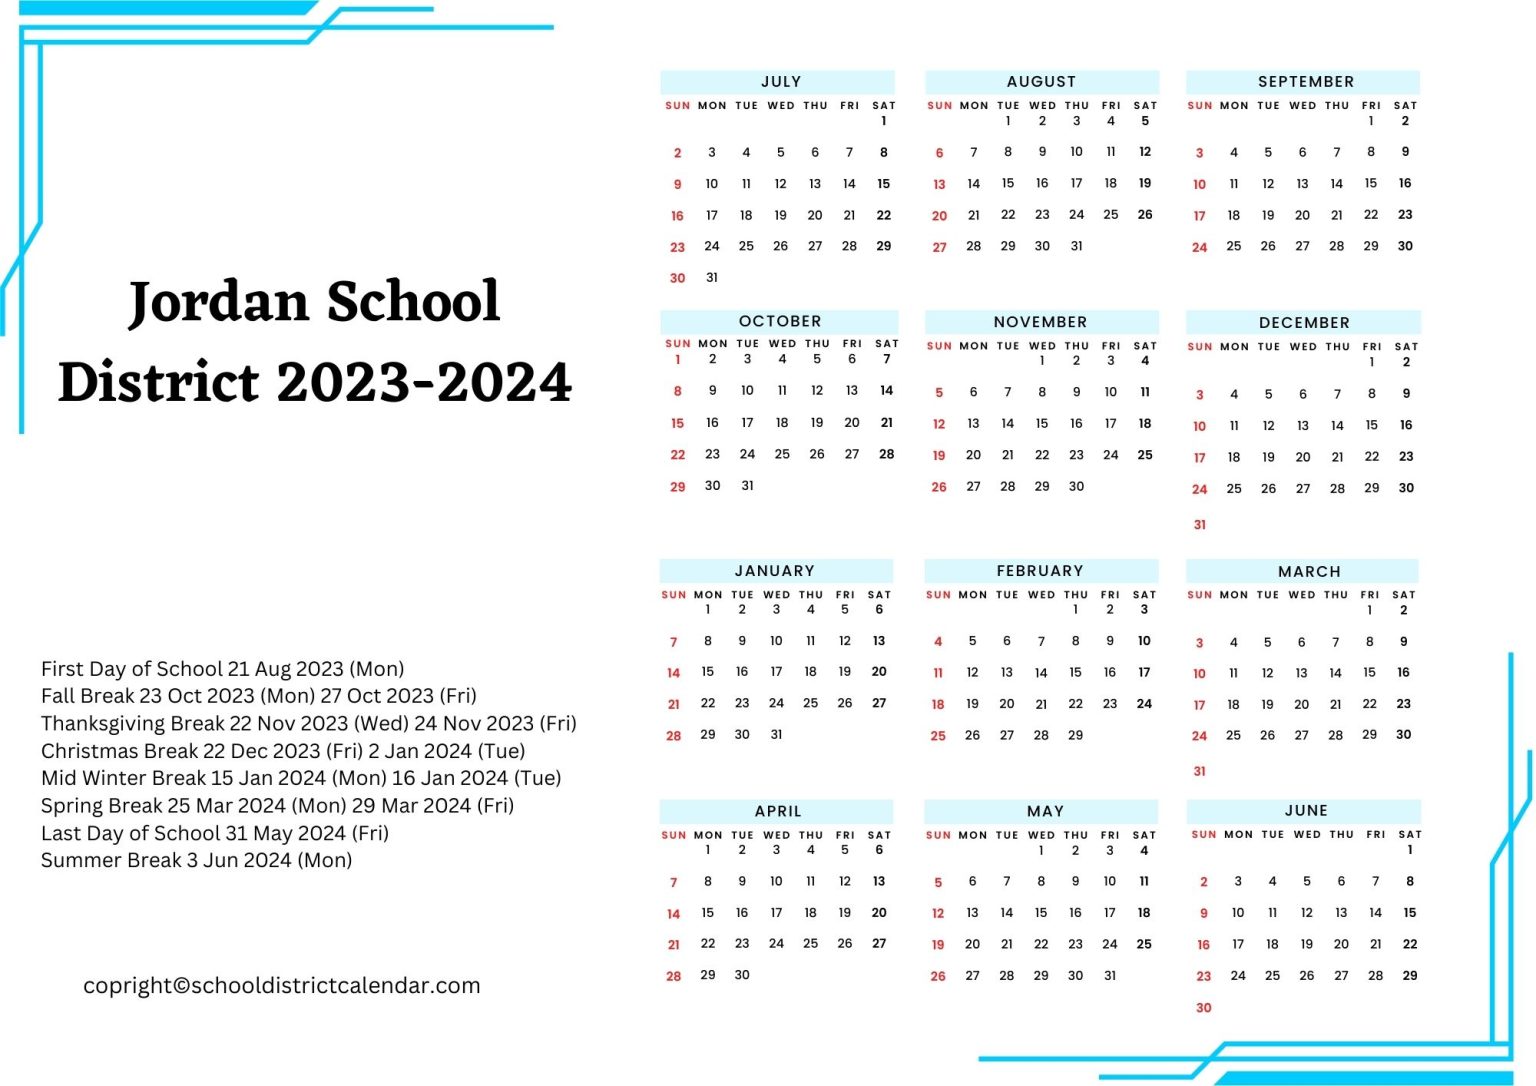 Jordan School District Calendar Holidays 20232024